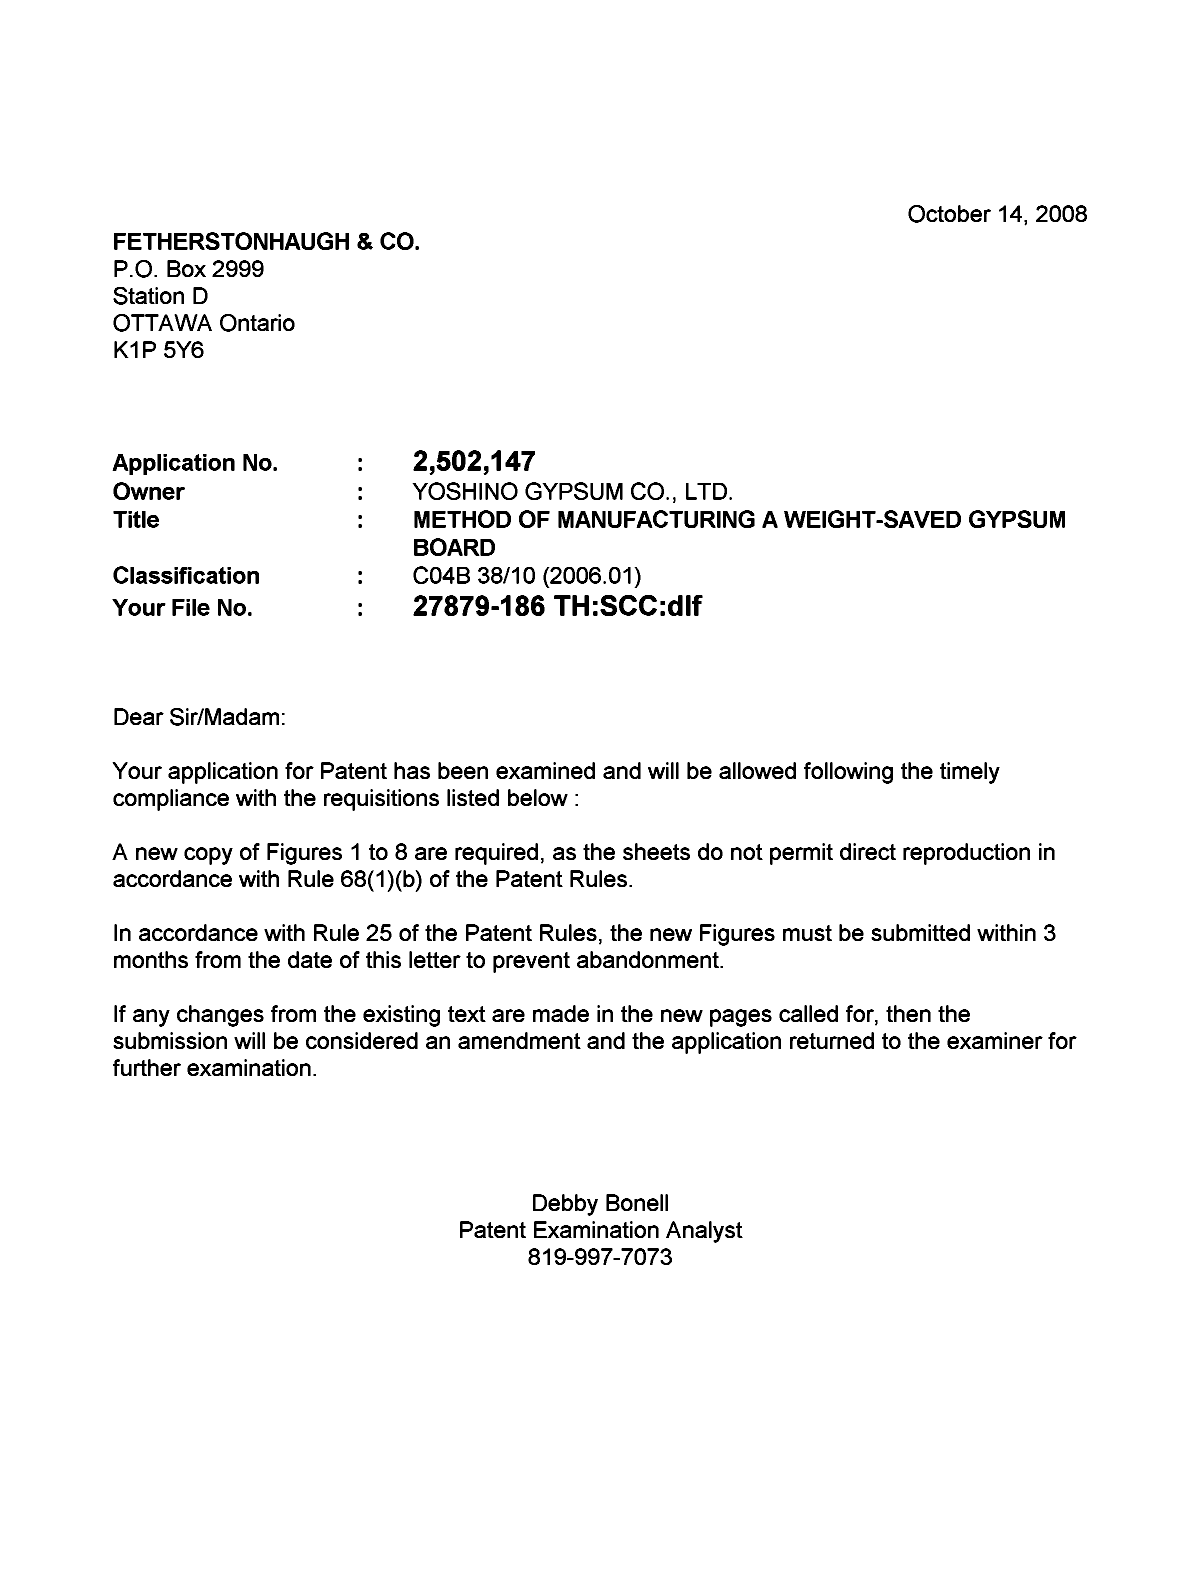 Canadian Patent Document 2502147. Correspondence 20081014. Image 1 of 1